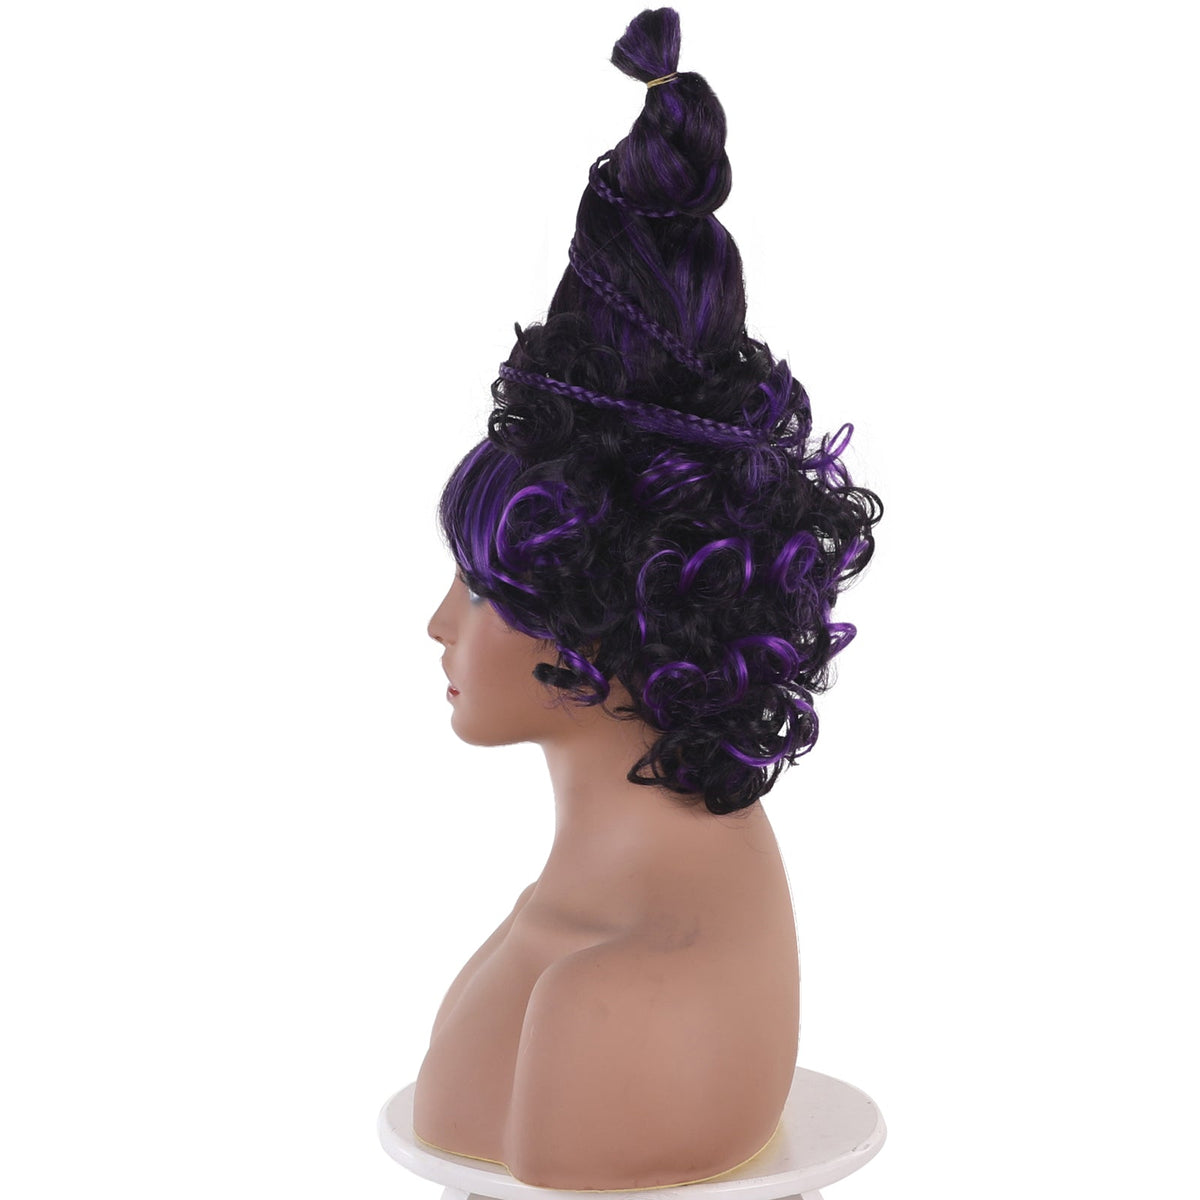 Hocus Pocus 2 Mary Sanderson Purple Short Movie Cosplay Halloween cosplay Wig Special Wig